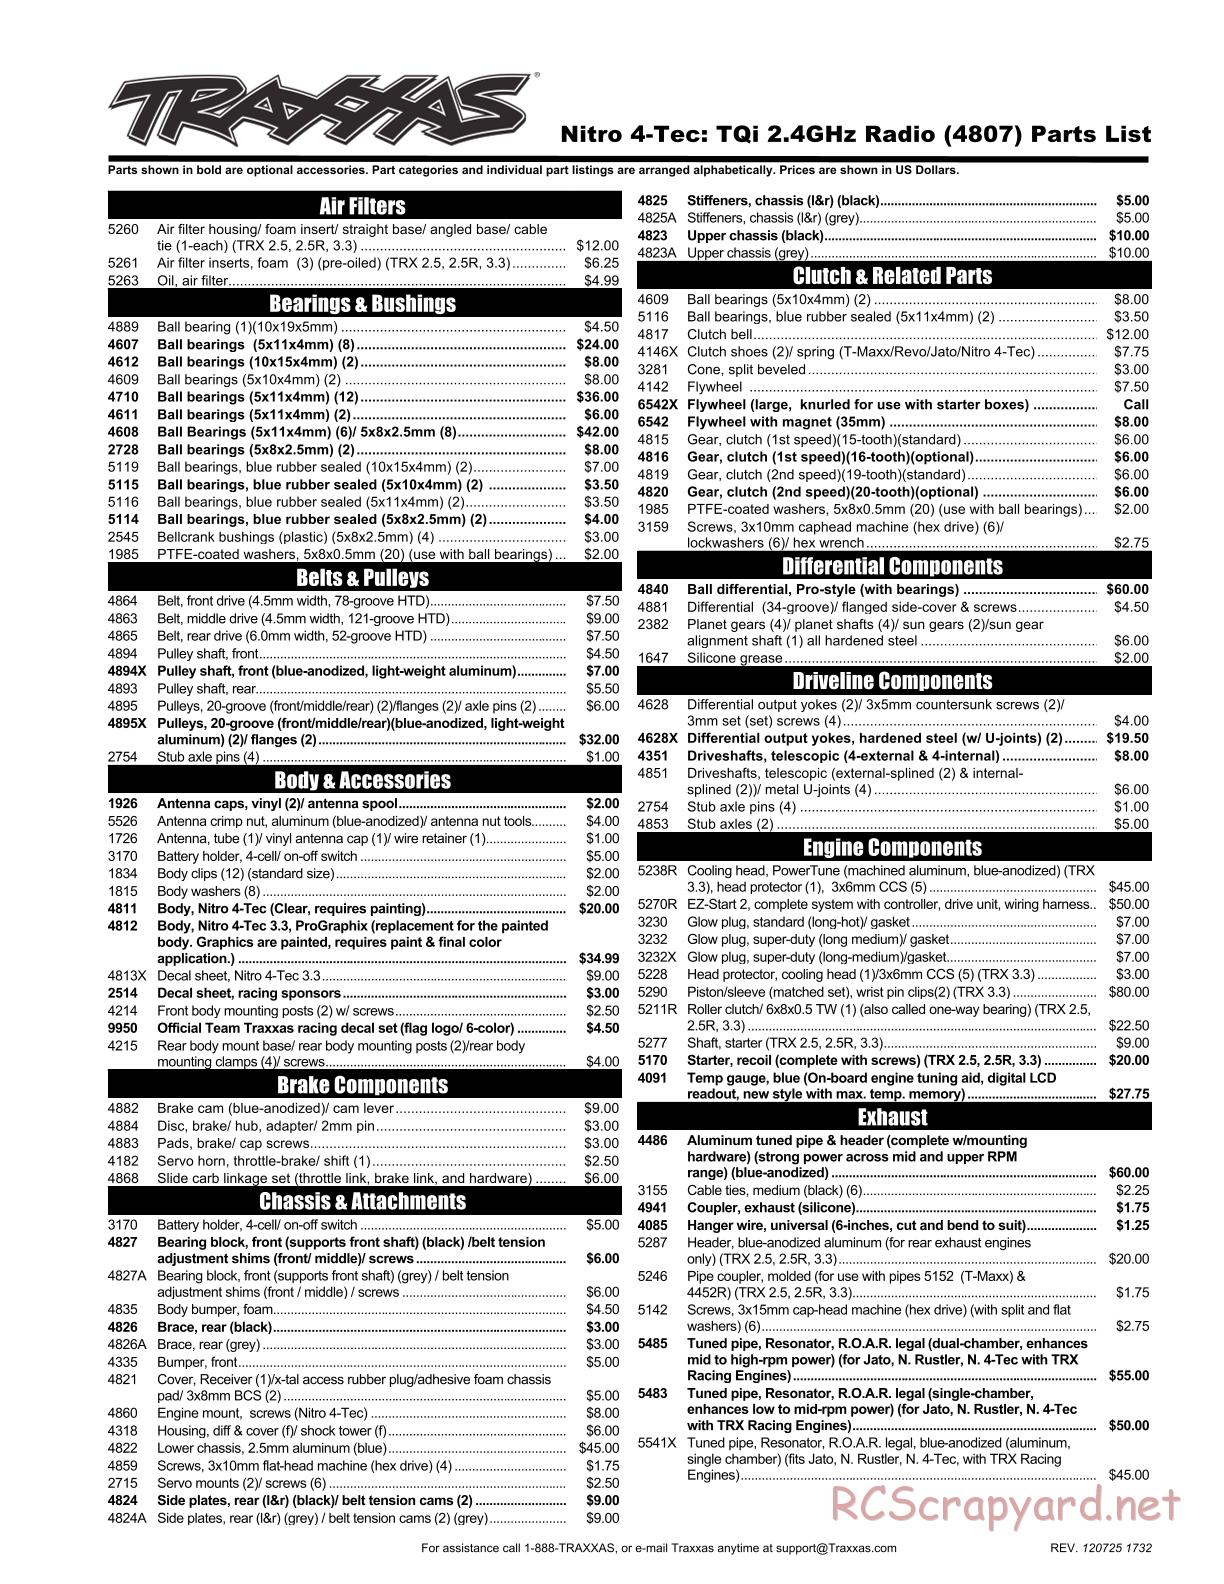 Traxxas - Nitro 4-Tec 3.3 (2010) - Parts List - Page 1